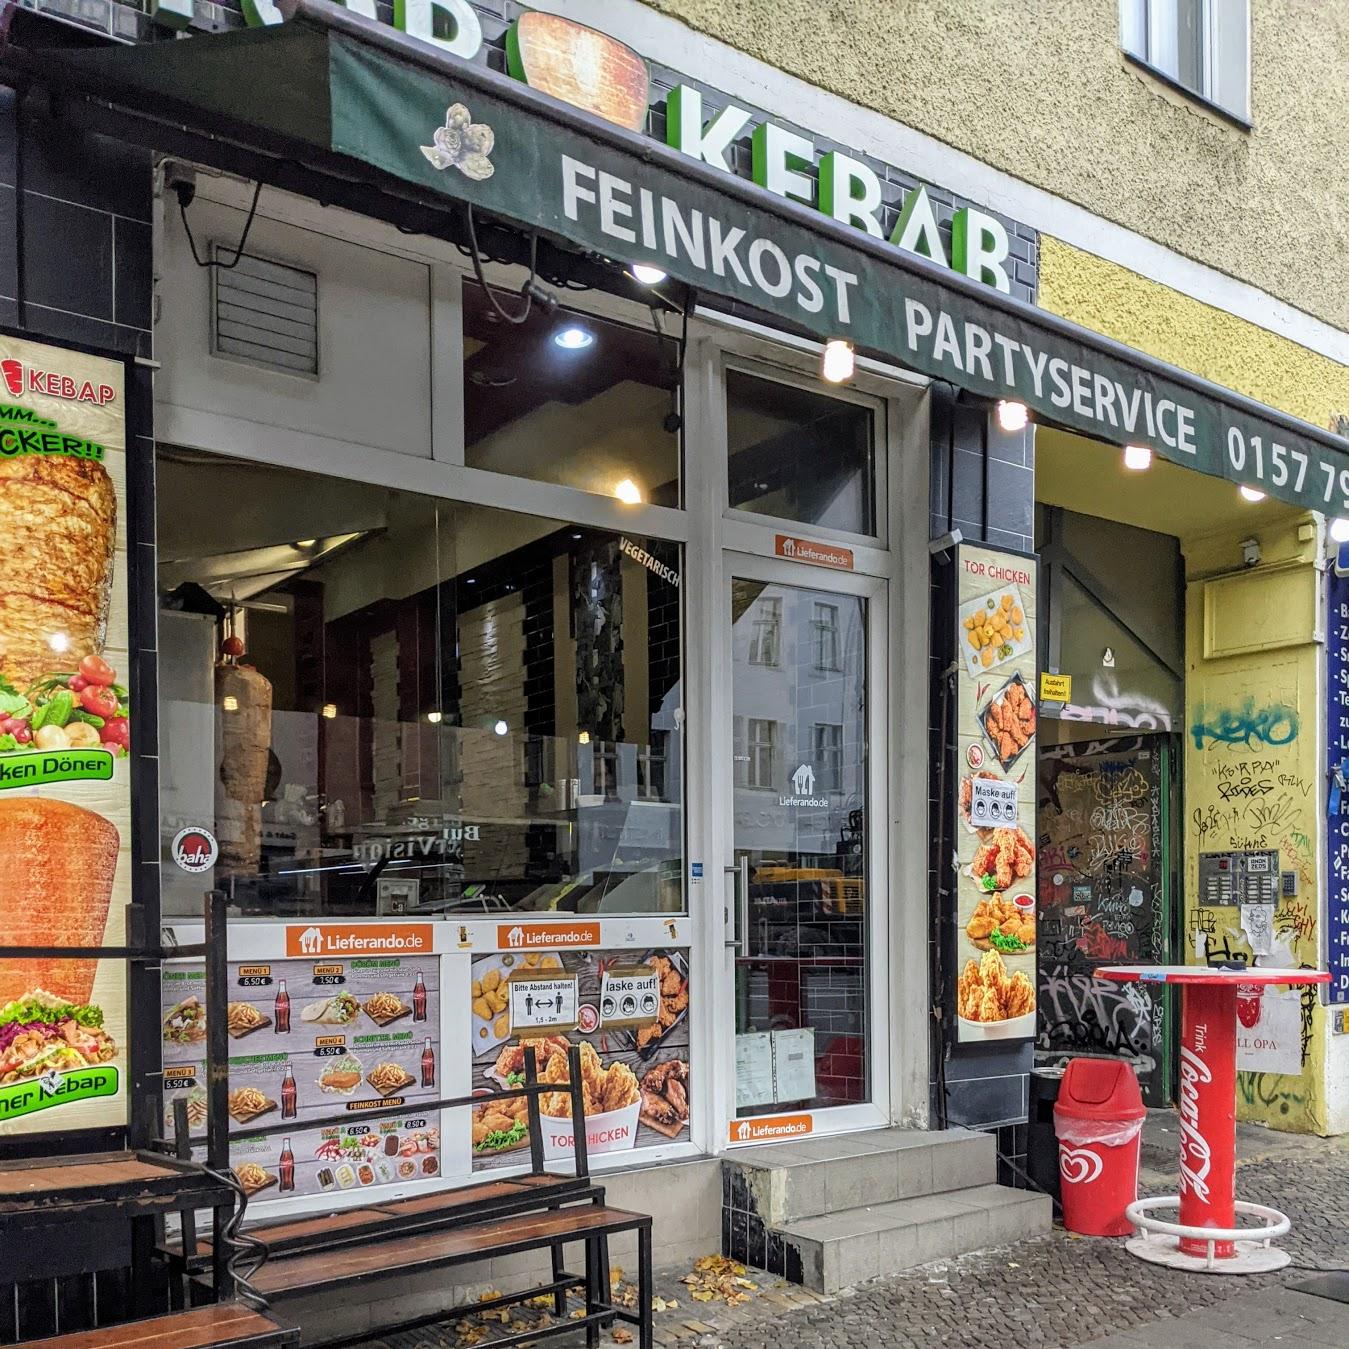 Restaurant "Tor Kebab" in Berlin